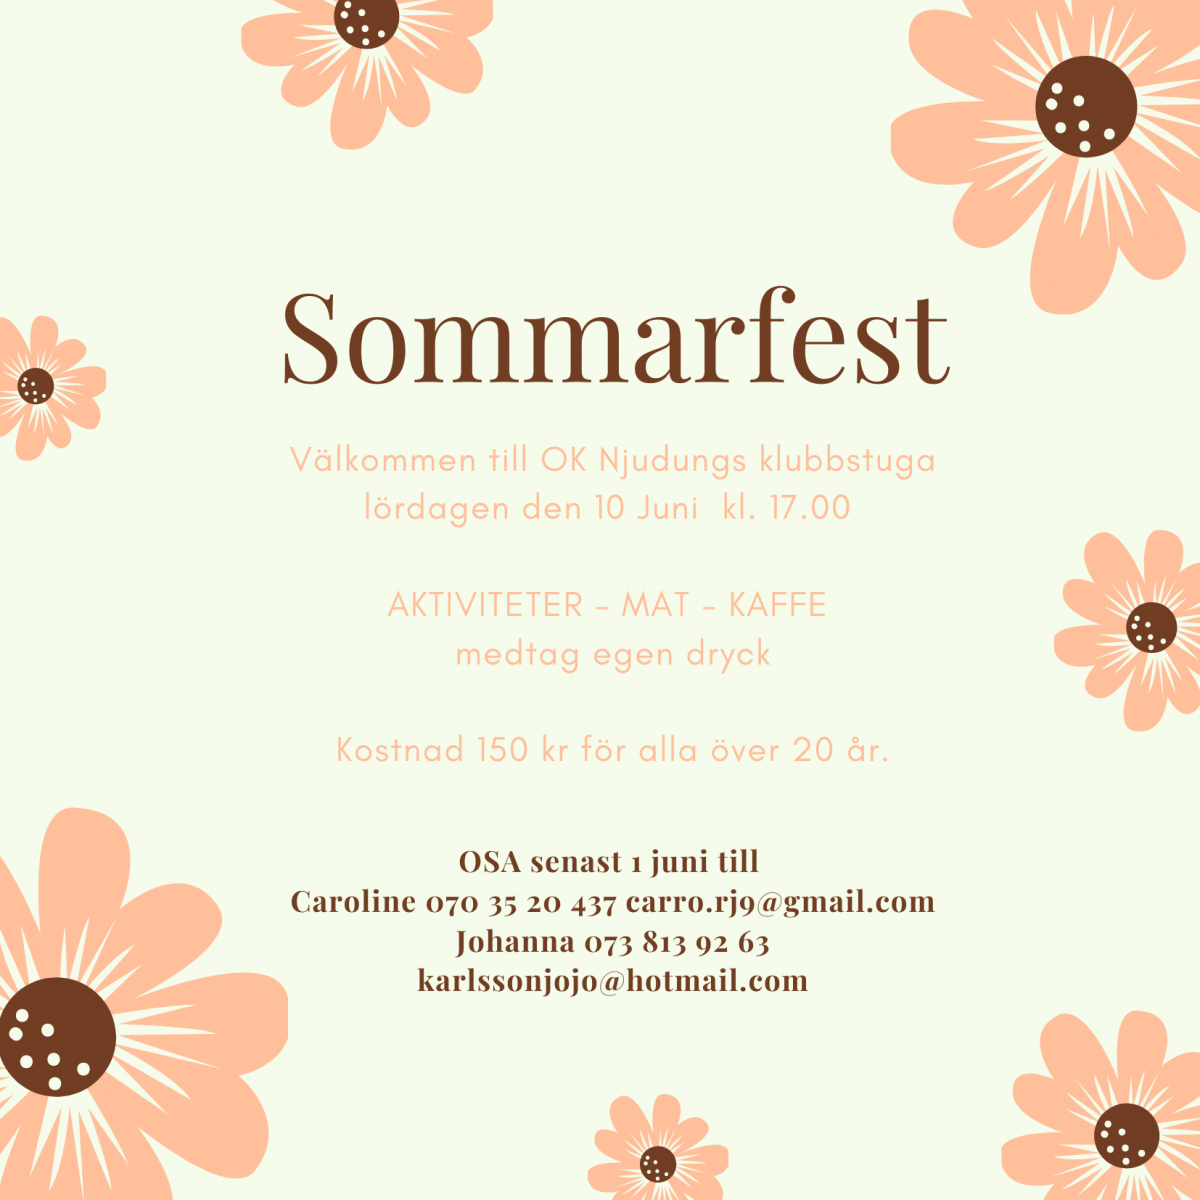 image: Sommarfest